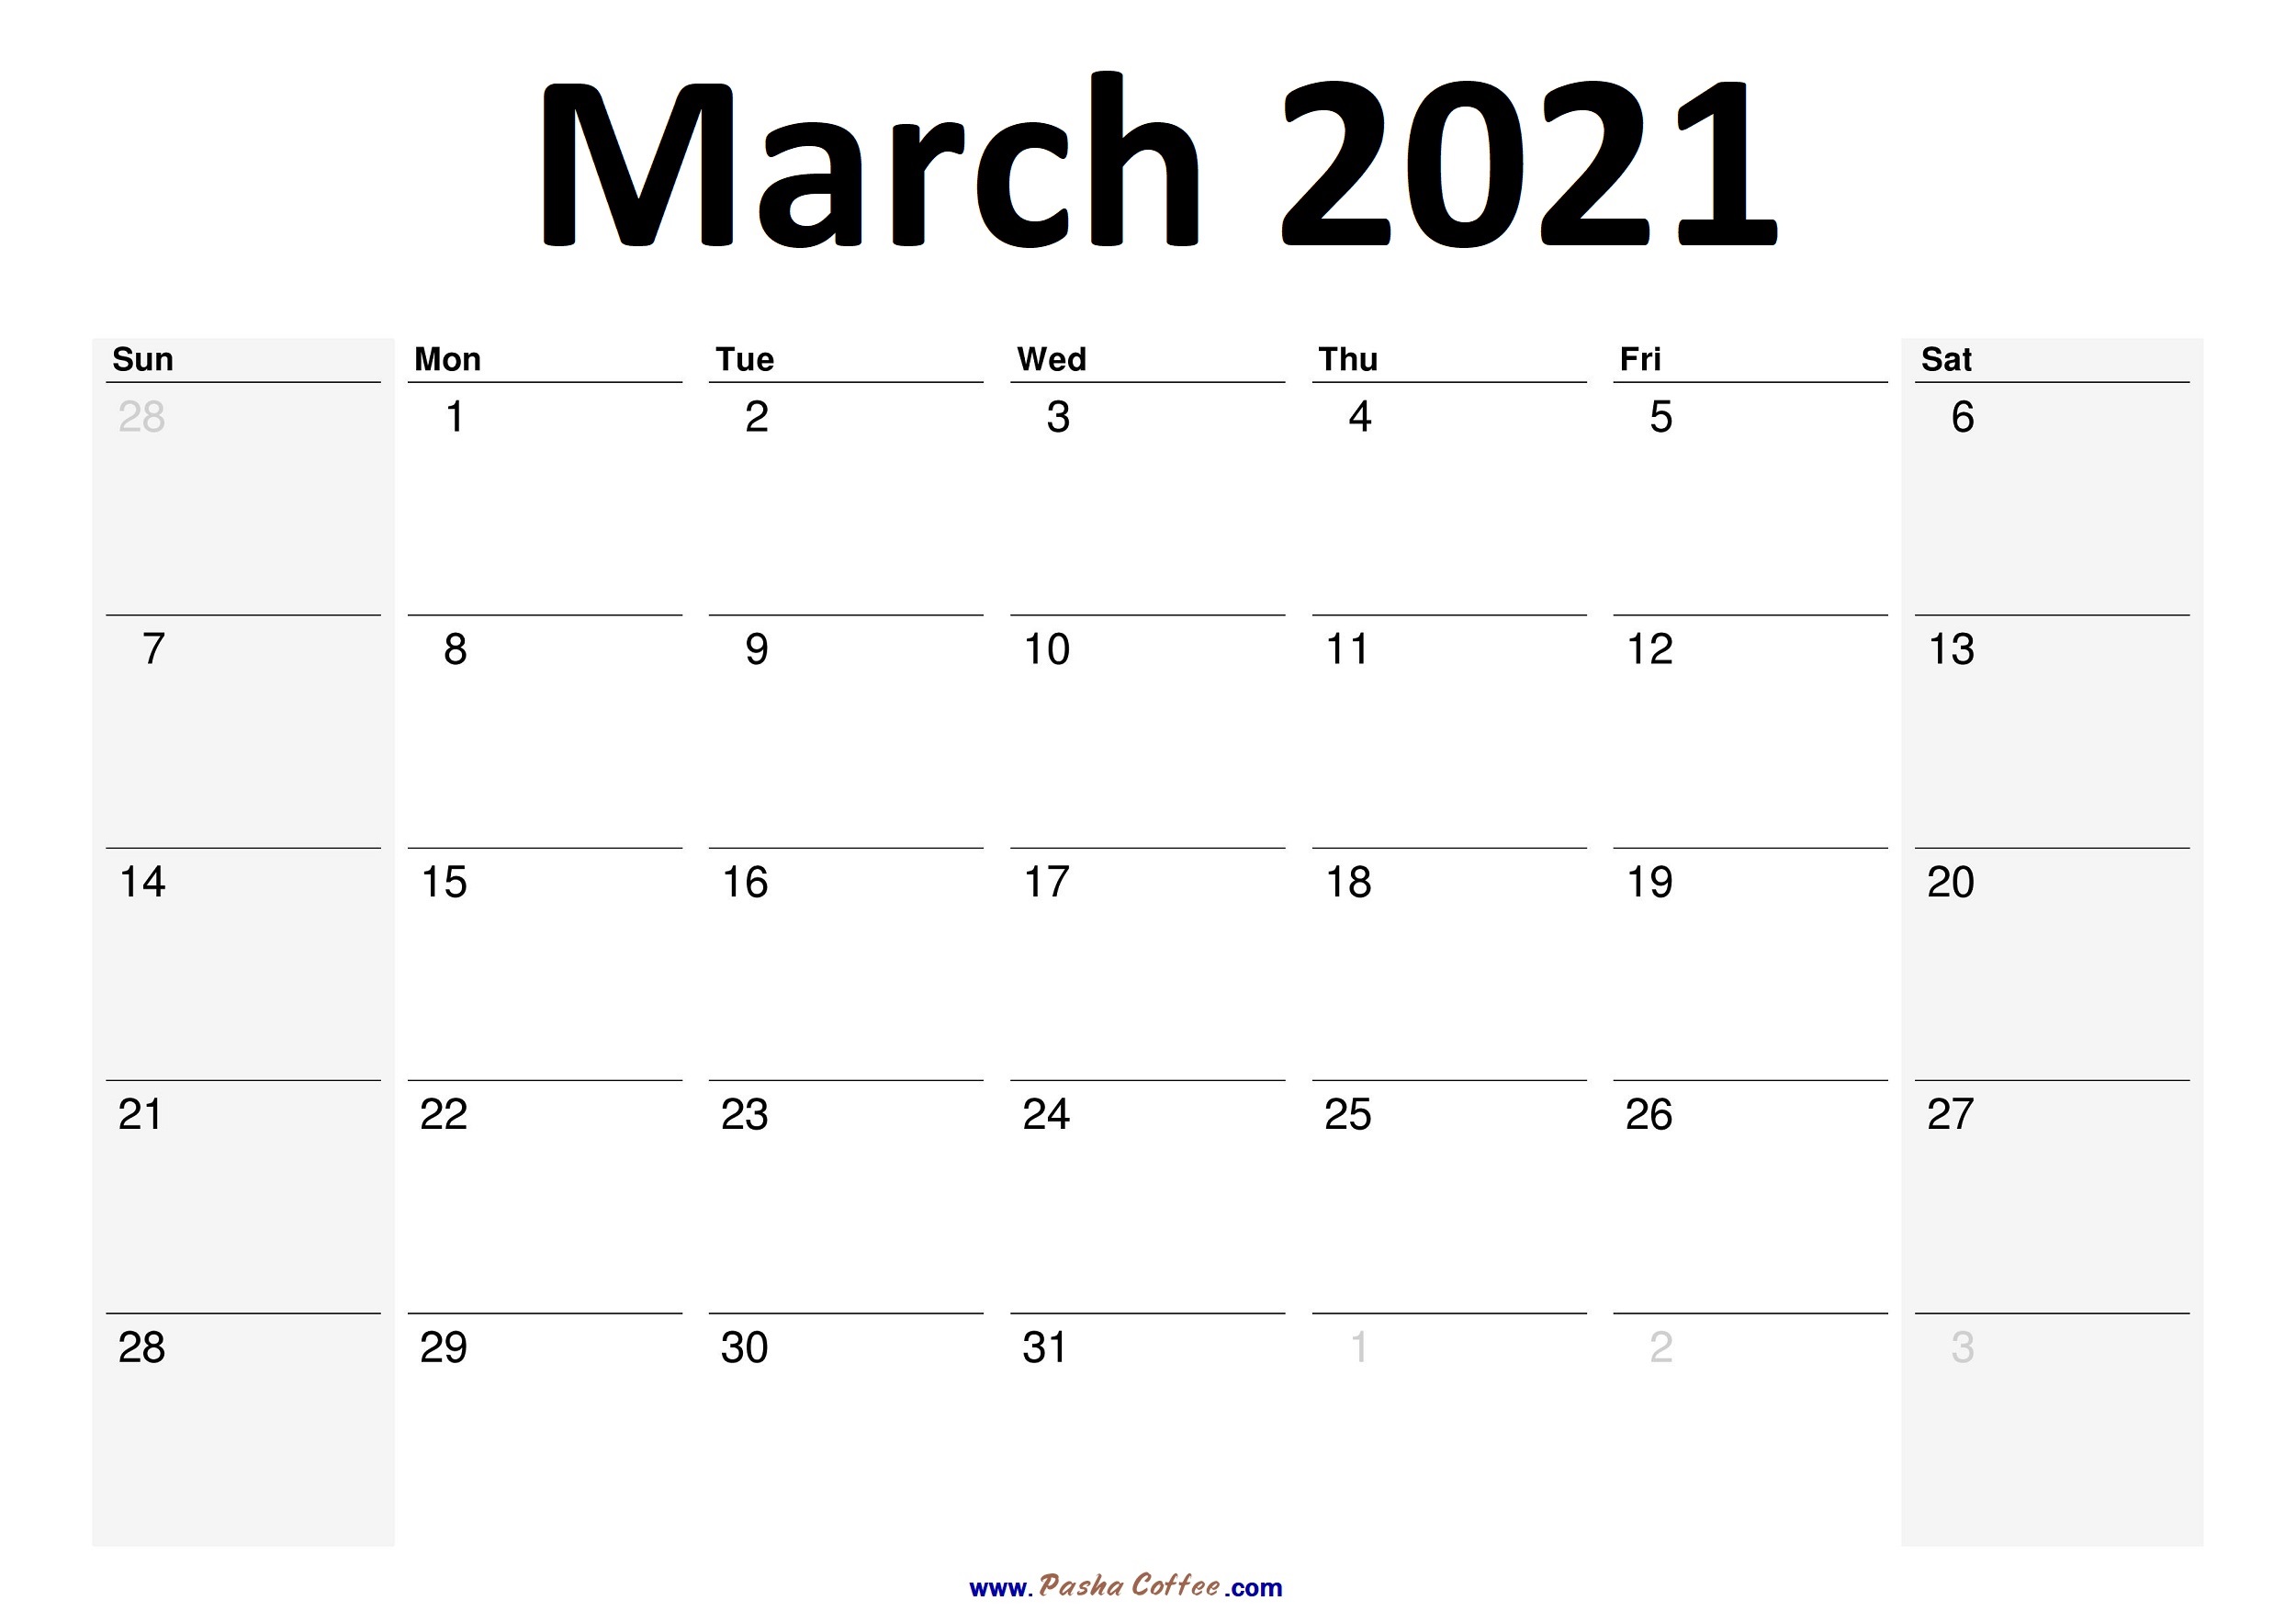 2021-March-Calendar-Planner01